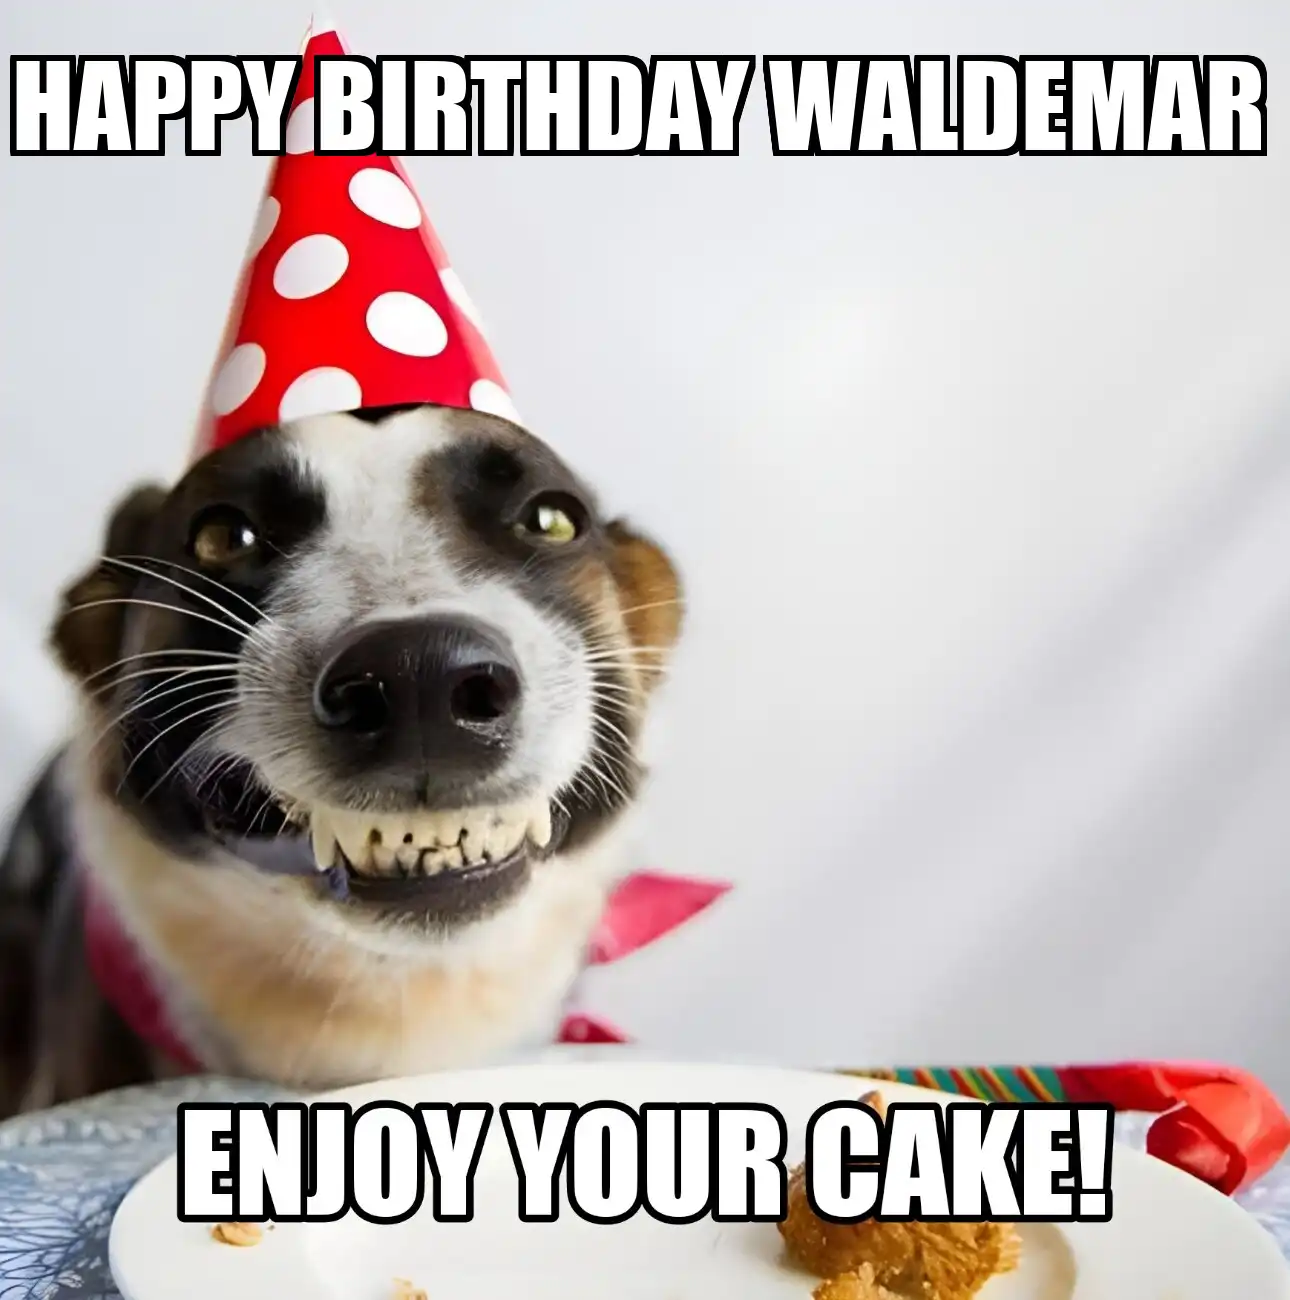 Happy Birthday Waldemar Enjoy Your Cake Dog Meme